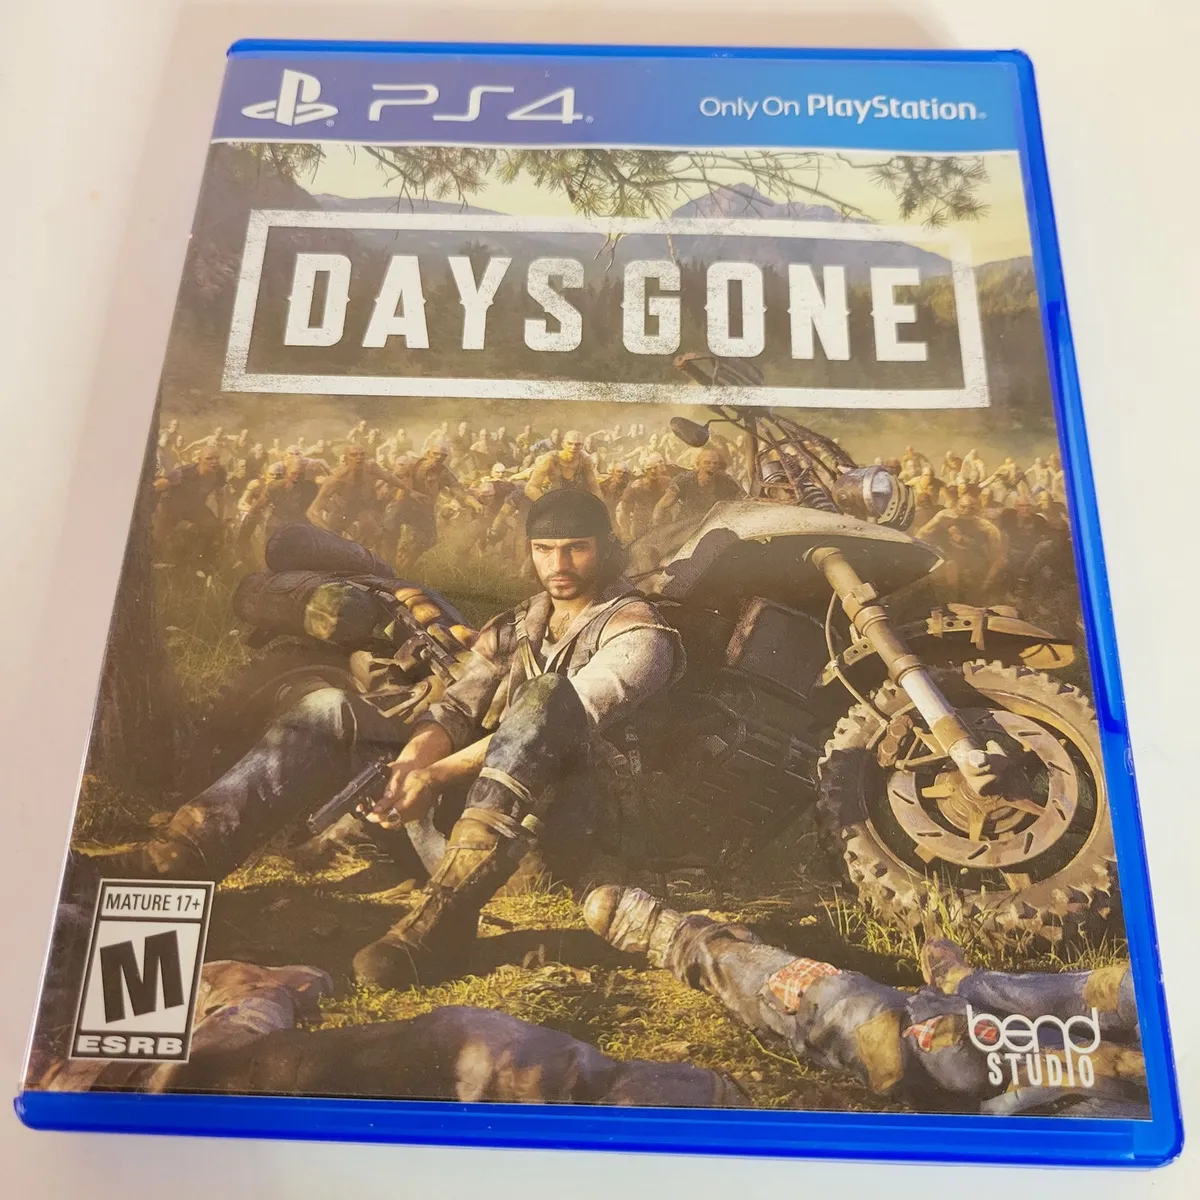 Days Gone - PS4 | PlayStation 4 | GameStop